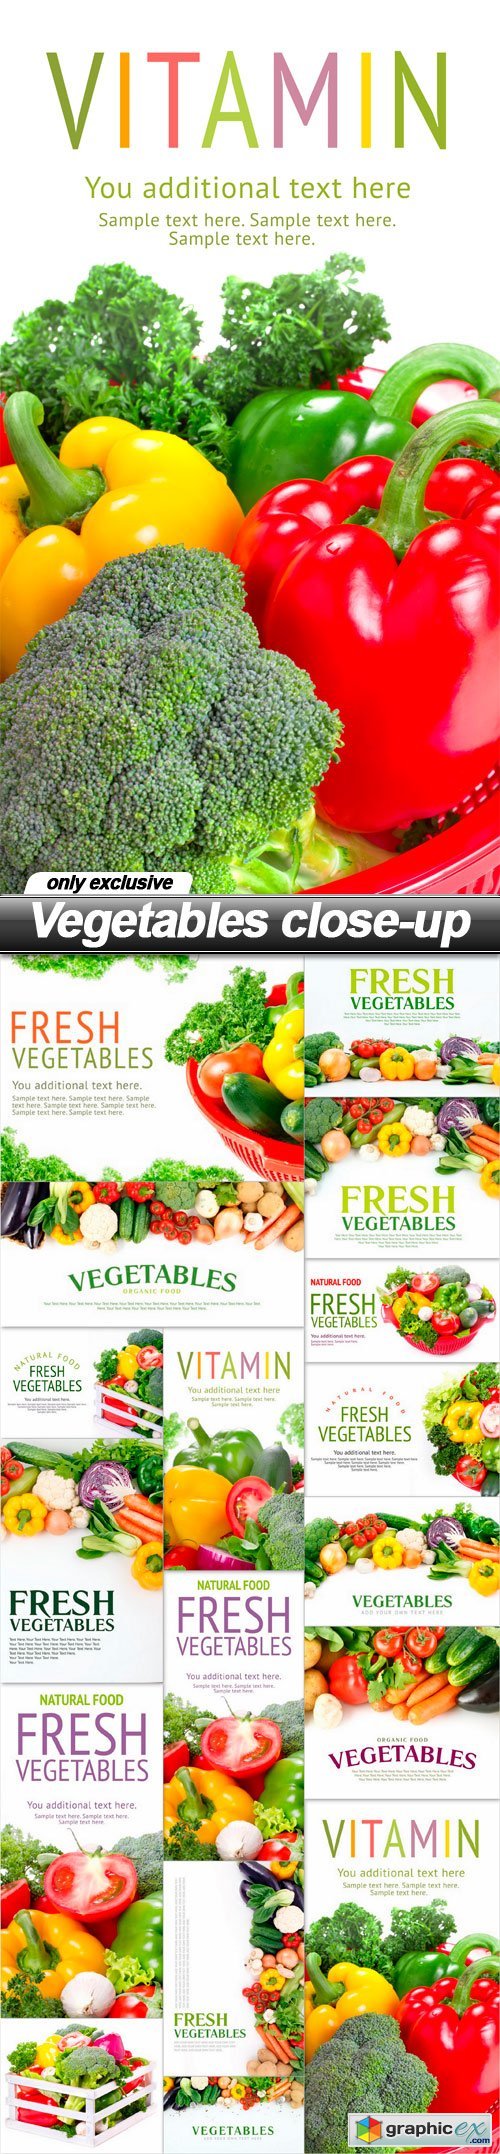 Vegetables close-up - 17 UHQ JPEG